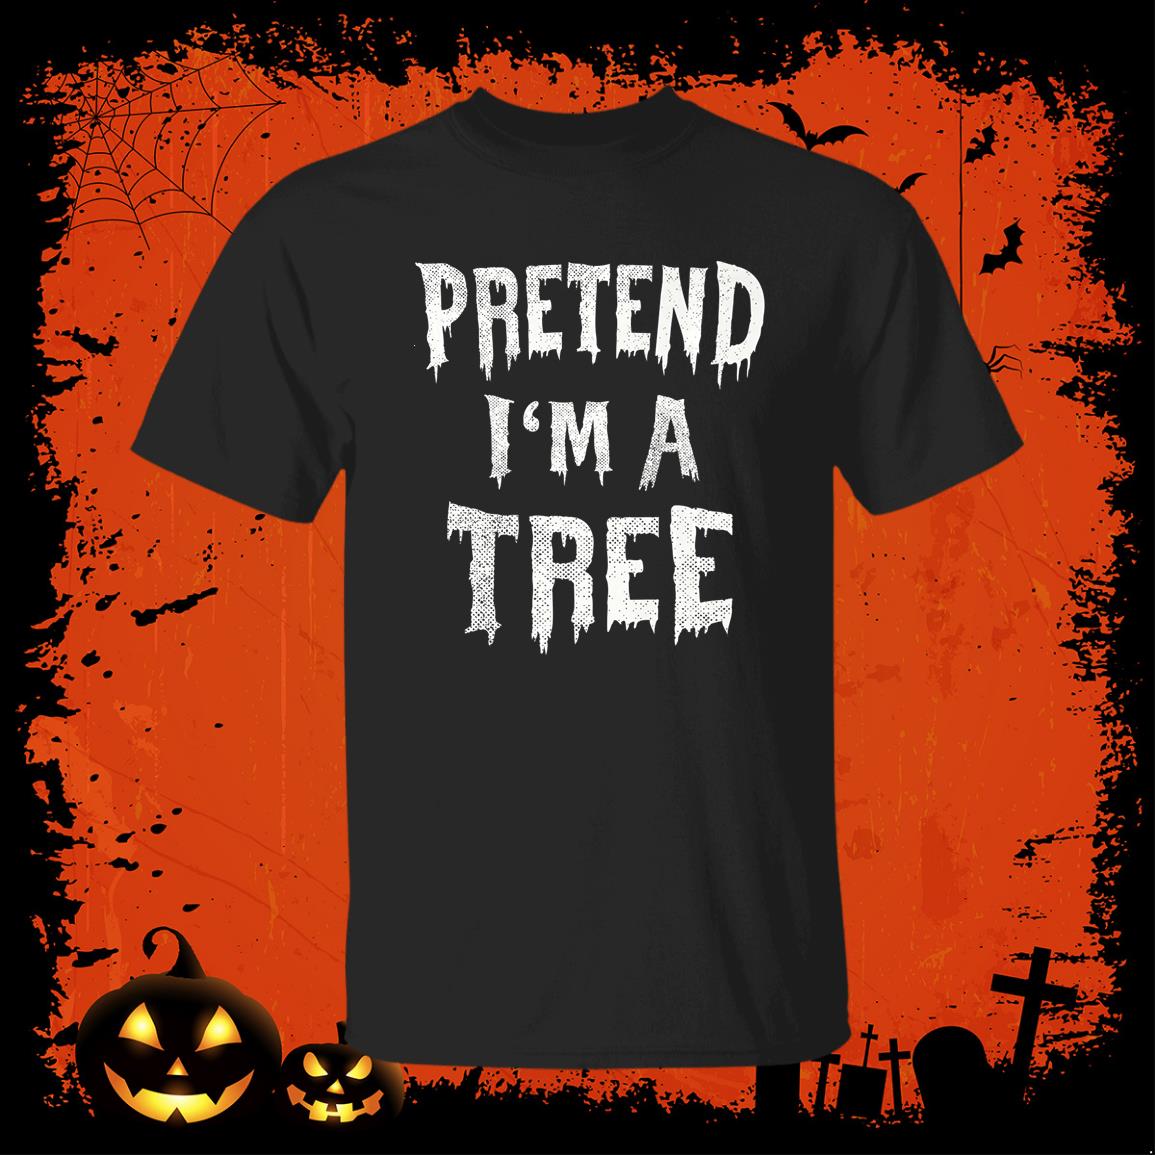 6 Super Easy Last-Minute Halloween Costume T-Shirt Ideas